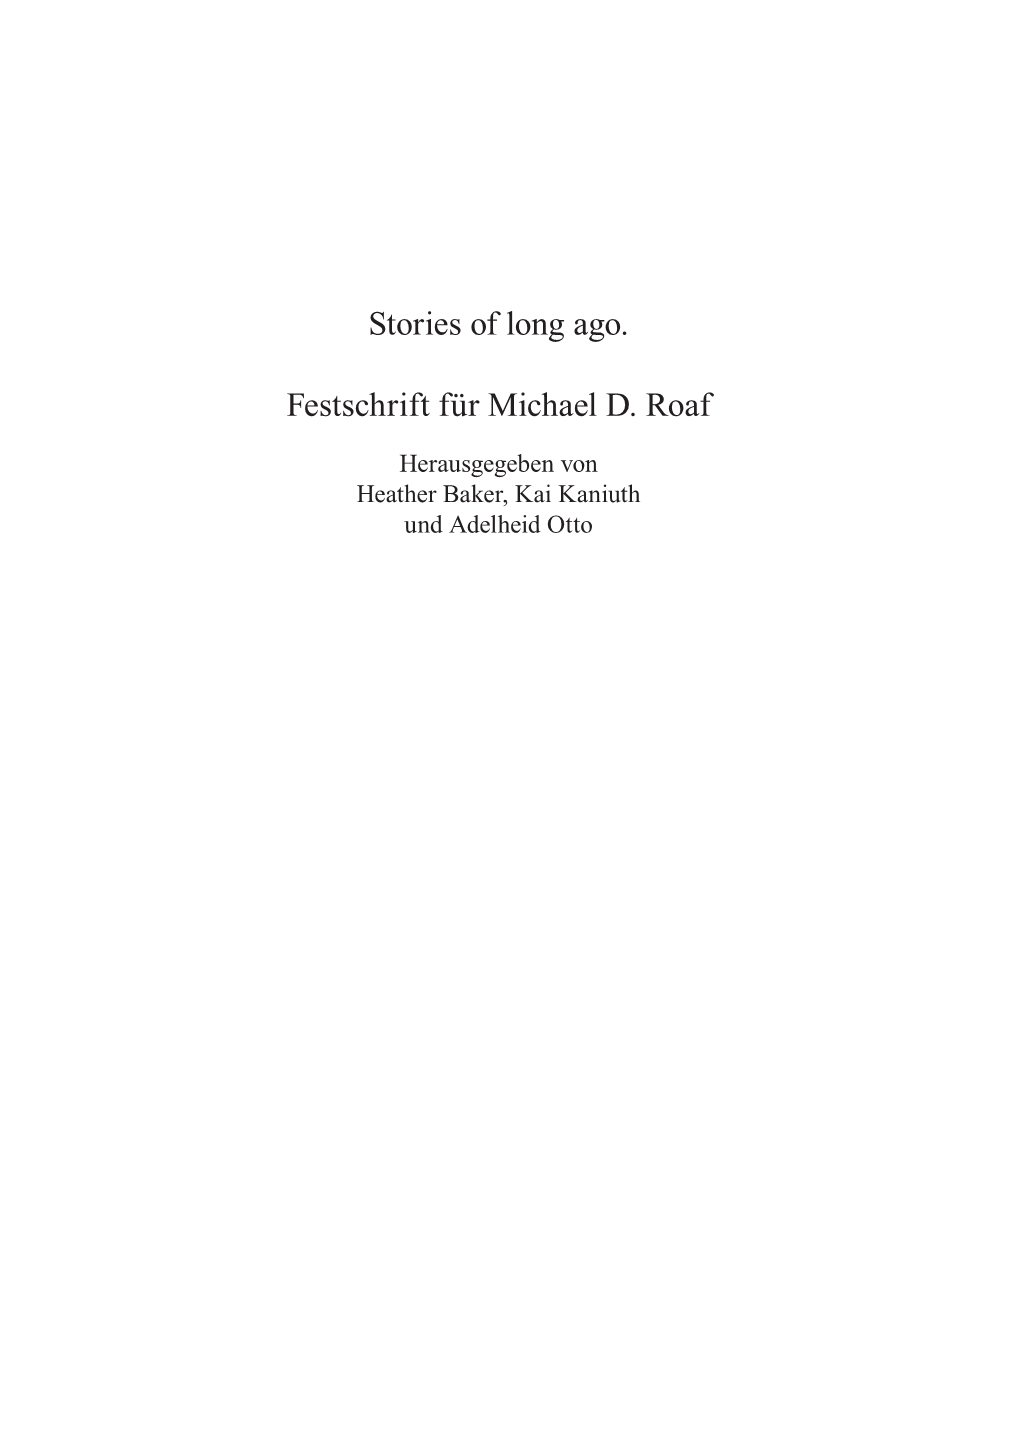 Stories of Long Ago. Festschrift Für Michael D. Roaf